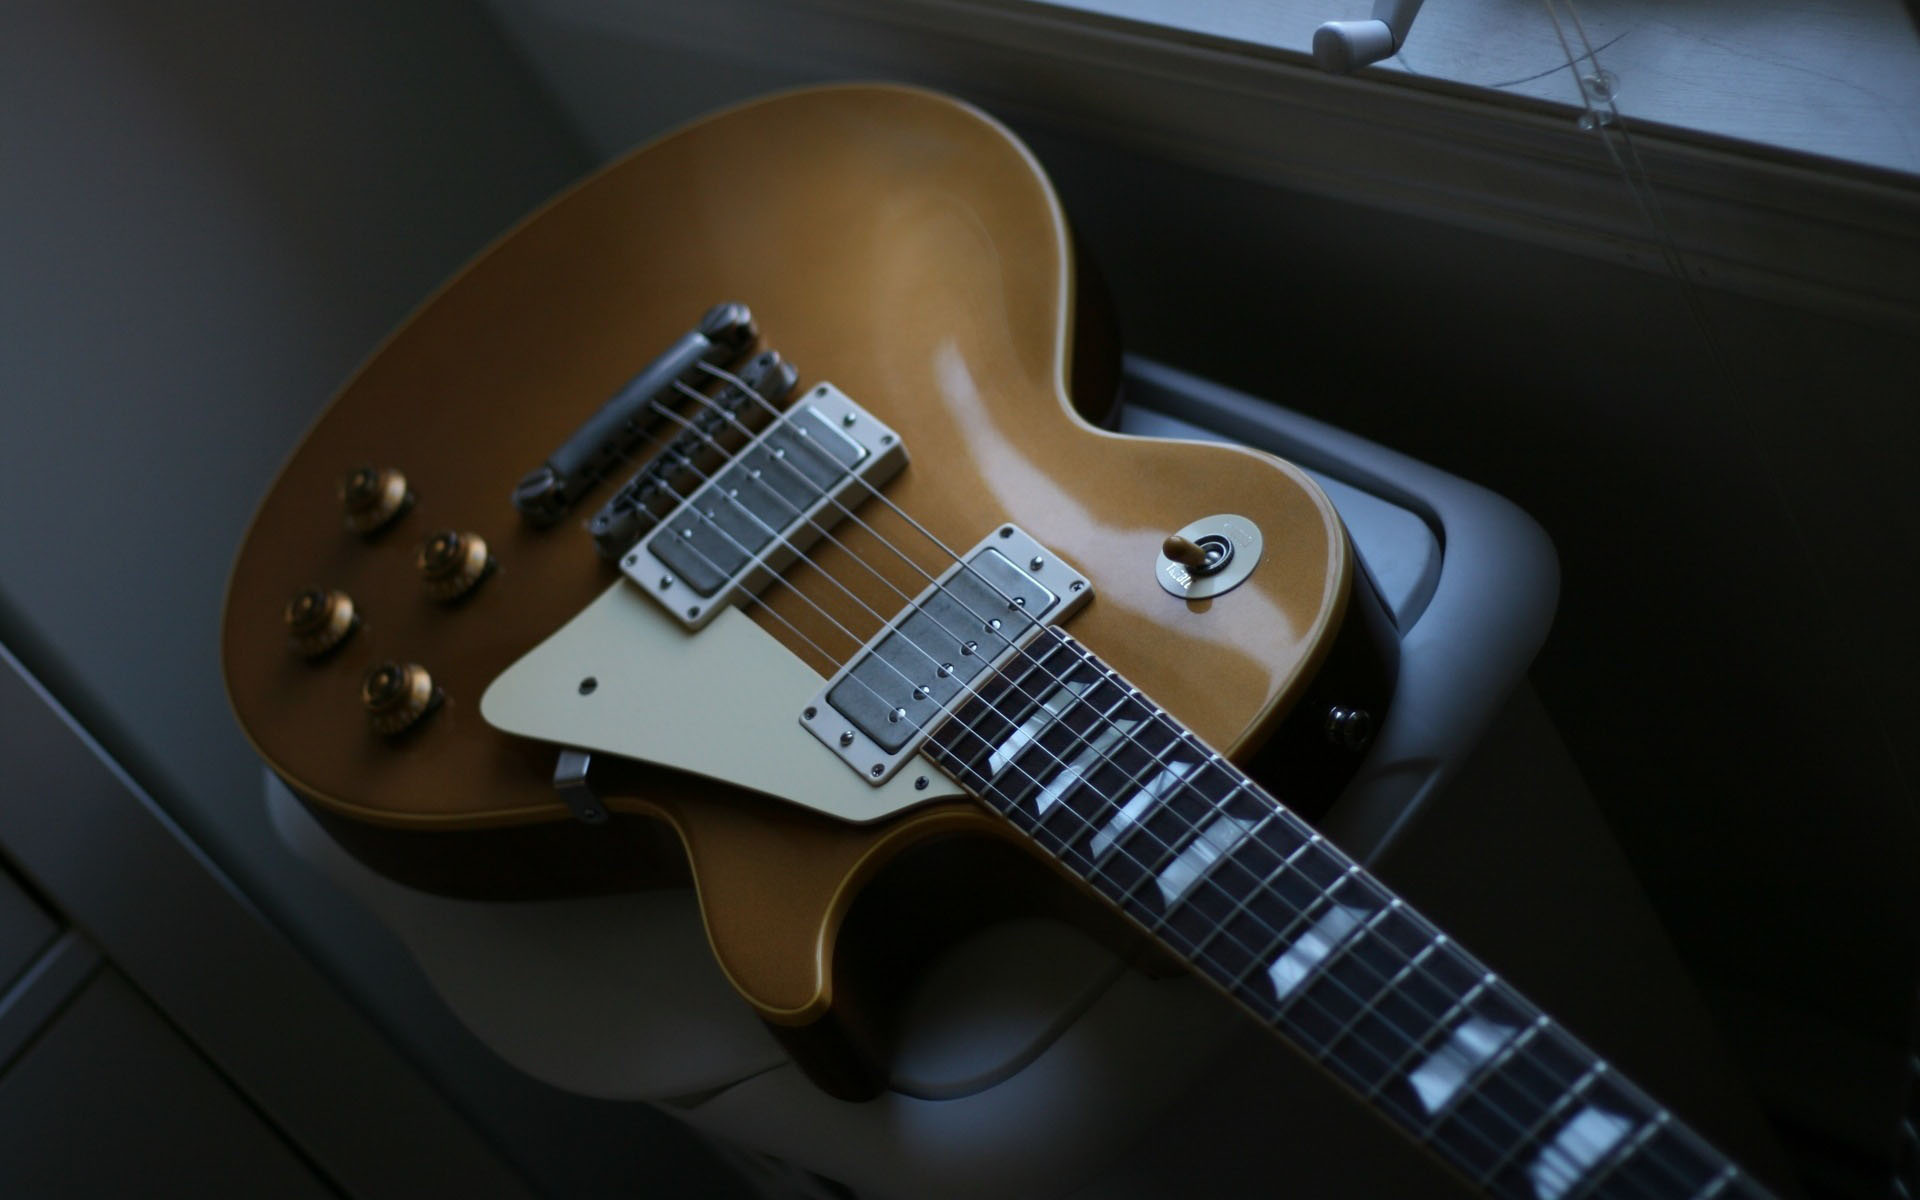 [49+] Gibson Guitar Wallpapers for Desktop on WallpaperSafari